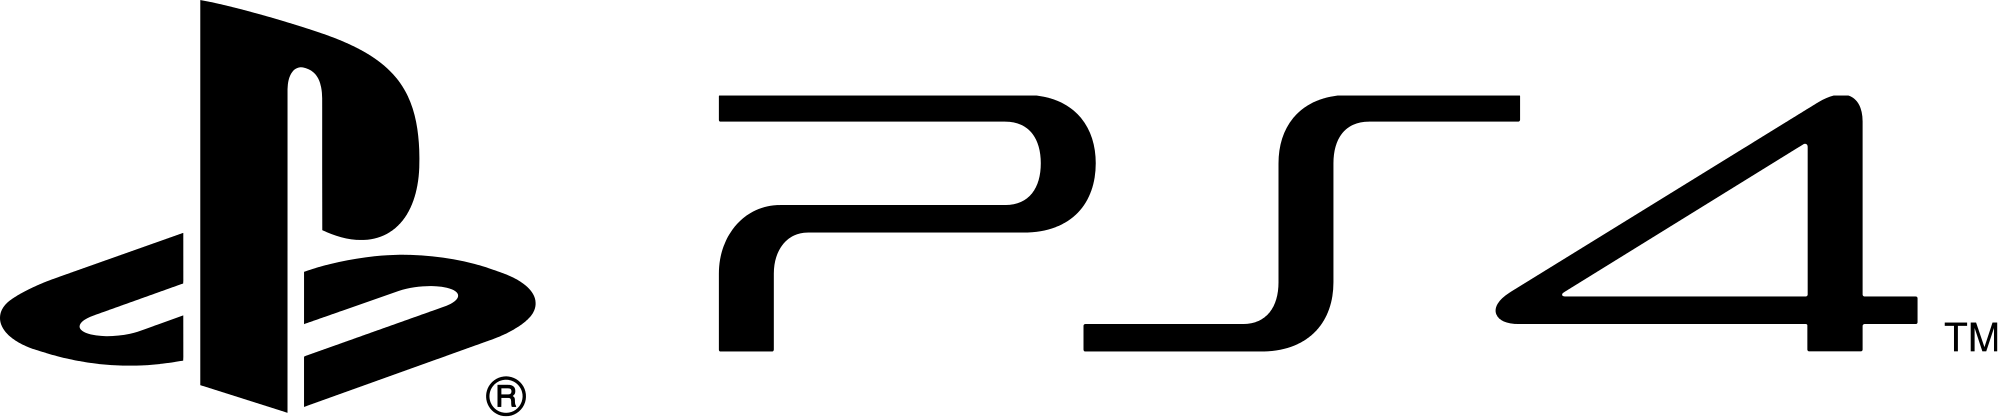 Playstation 4: disponibile un backup loader per PS4 su firmware 4.05